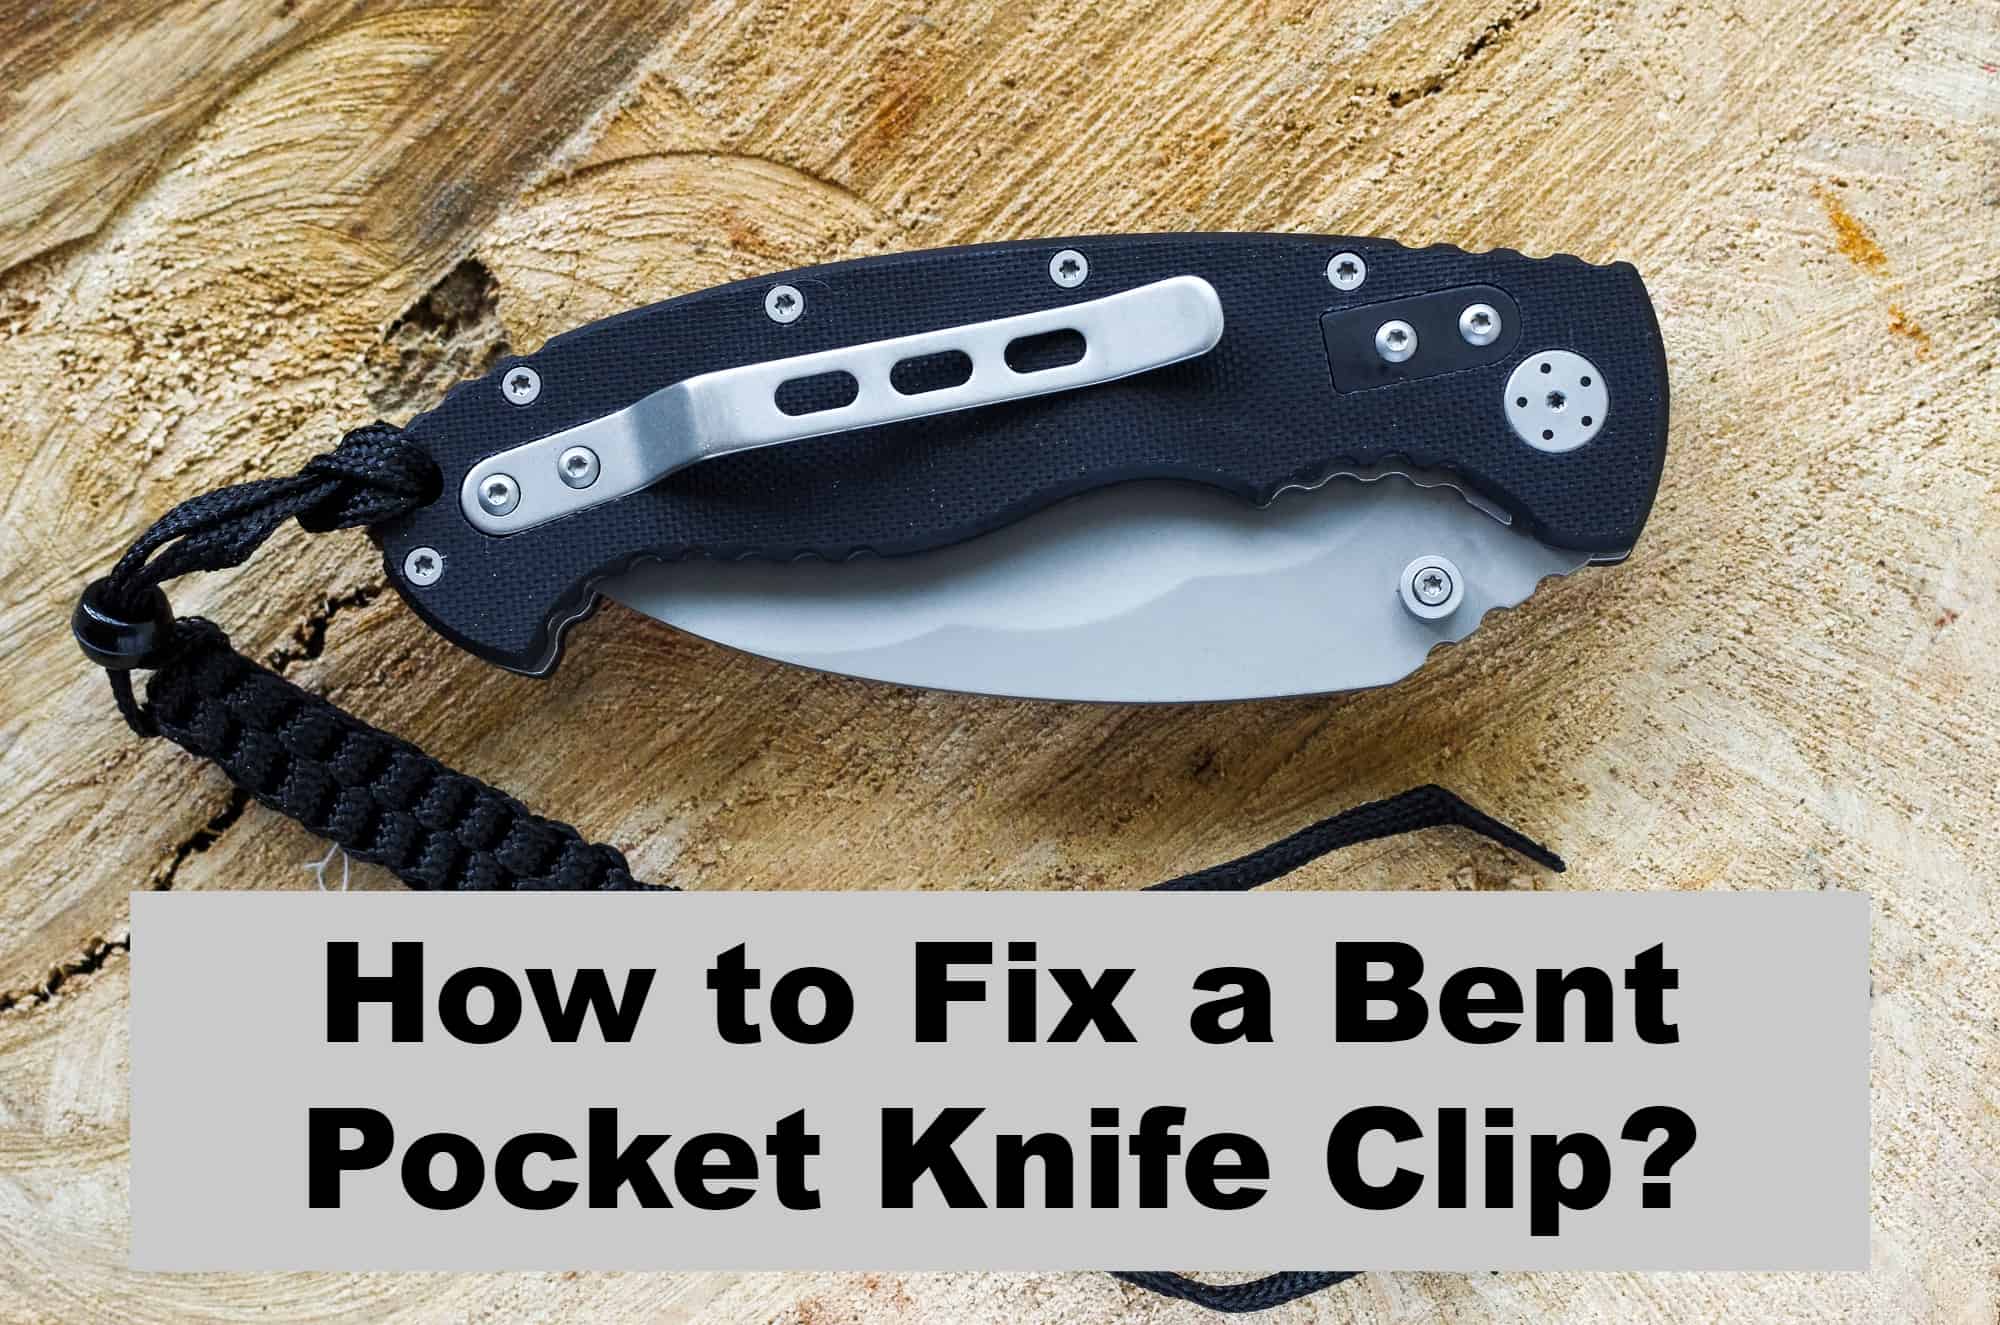 How to Fix a Bent Pocket Knife Clip?